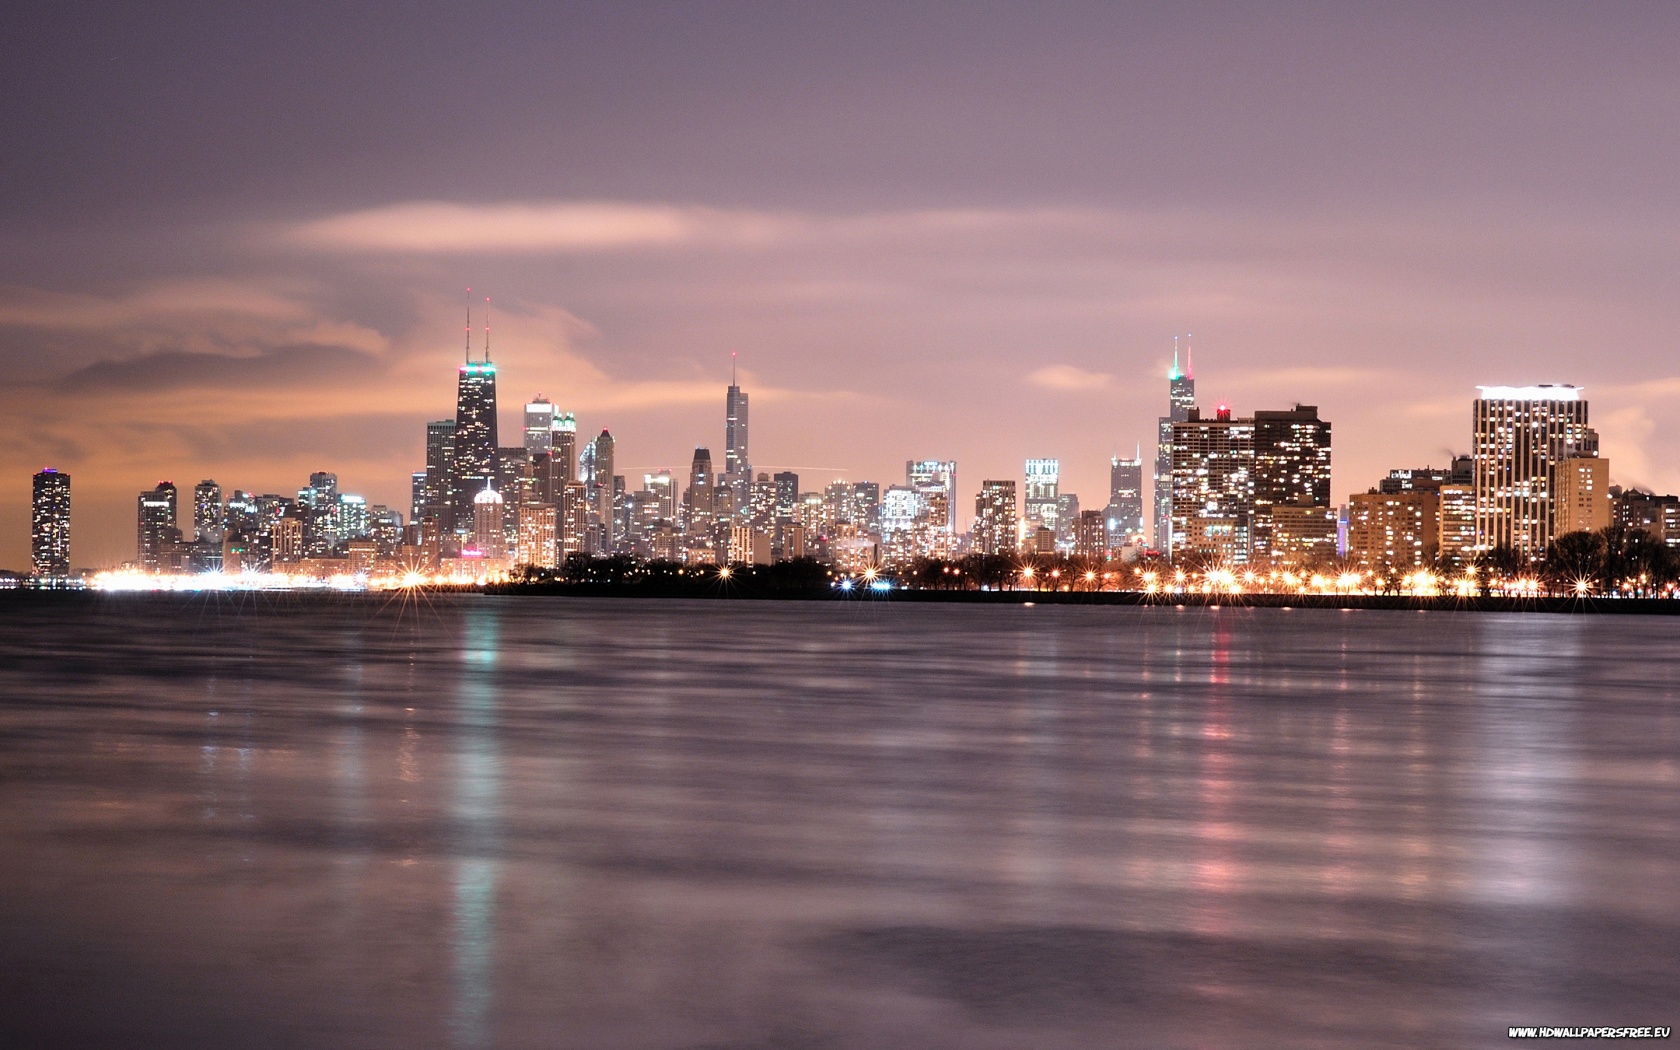  Download Free Chicago Skyline wallpaperdesktopiPad background